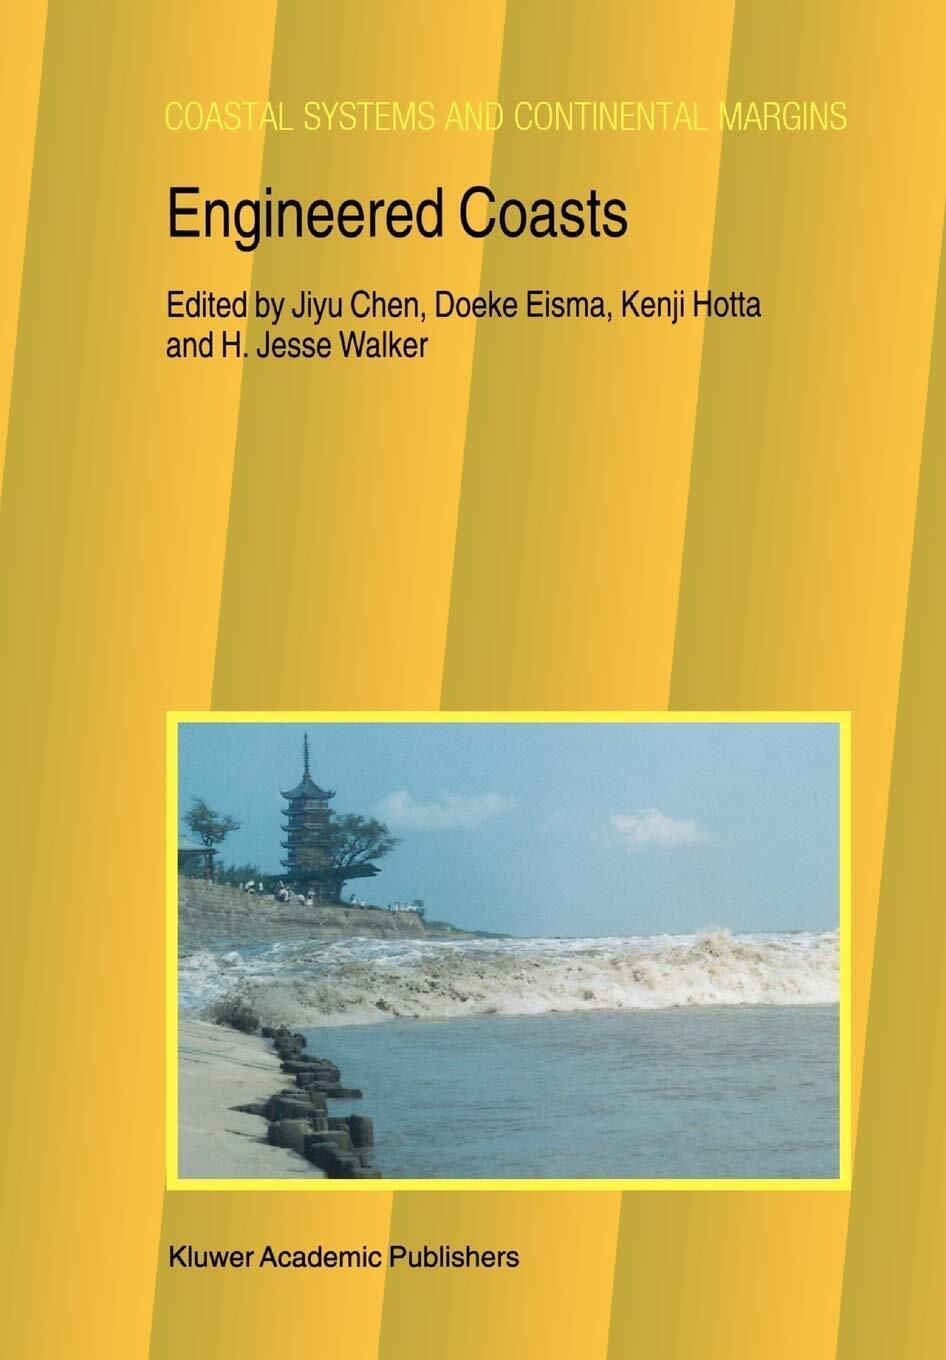 Engineered Coasts - i Jiyu Chen - Springer, 2010